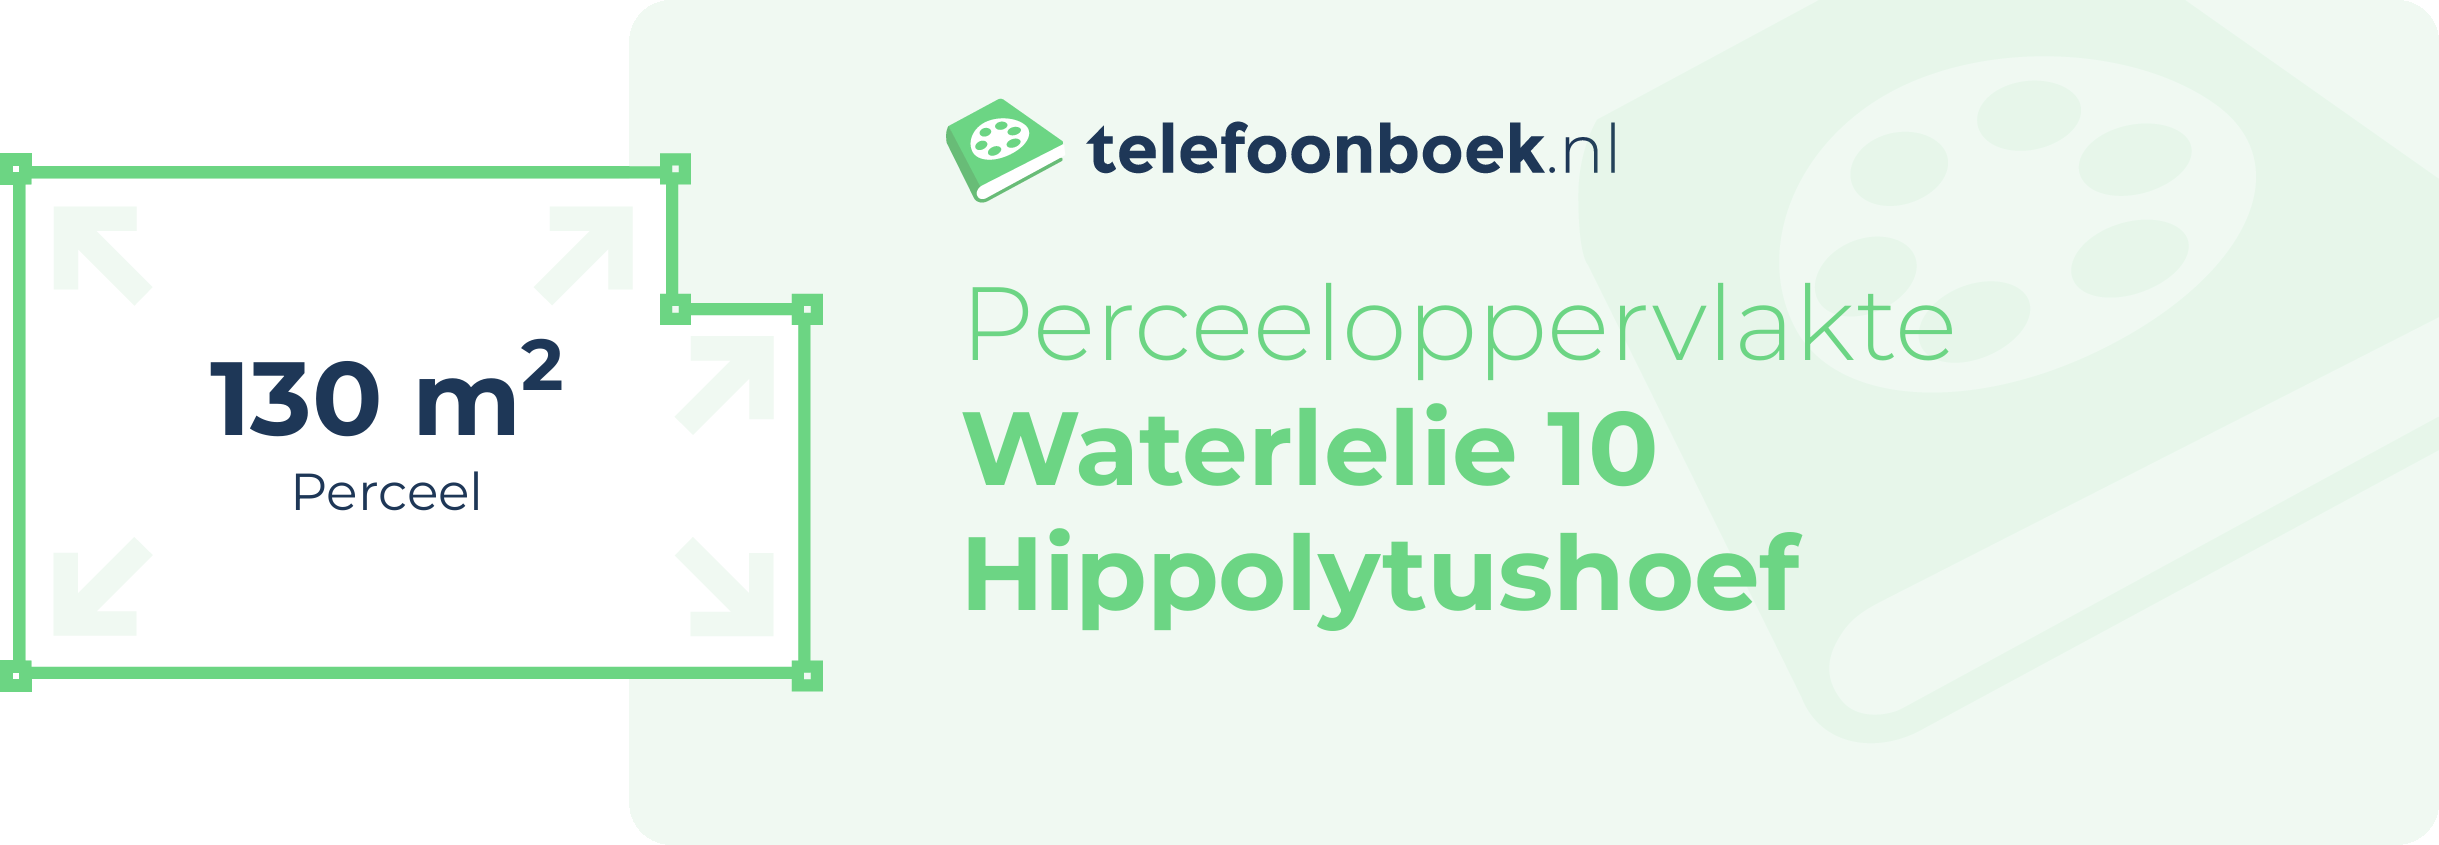 Perceeloppervlakte Waterlelie 10 Hippolytushoef